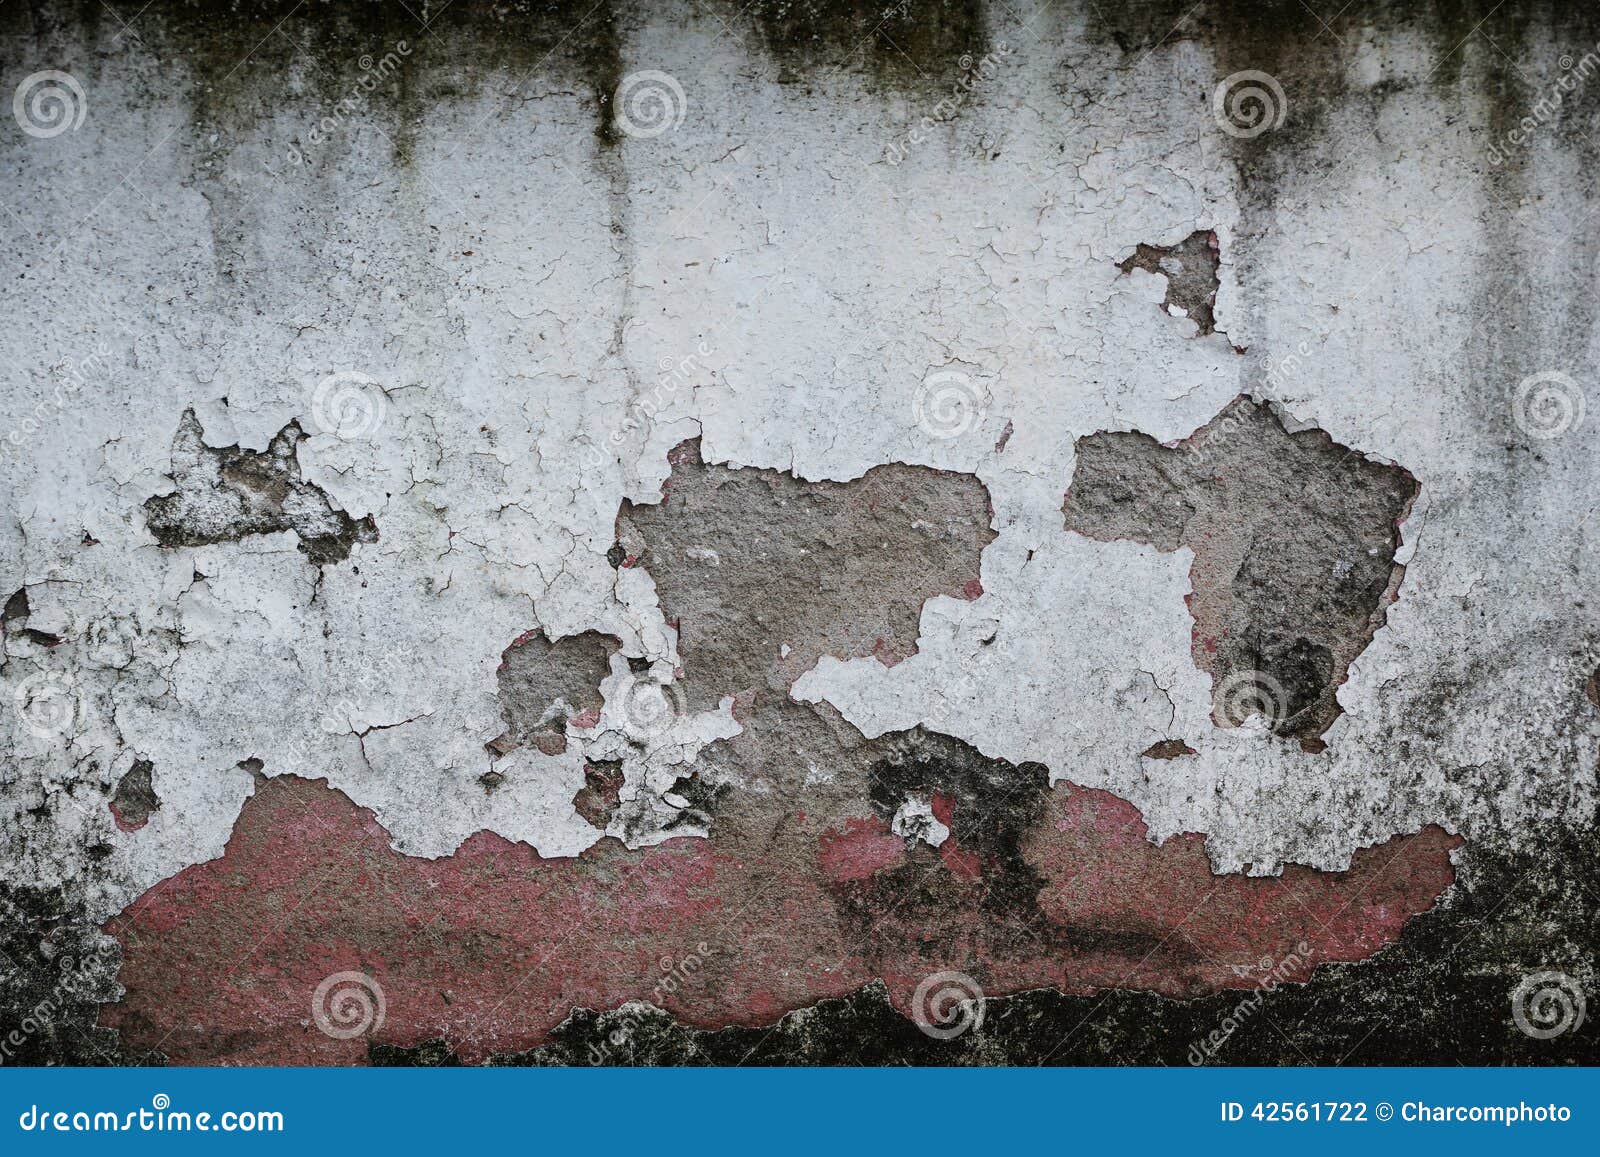 Break cement texture stock photo. Image of stucco, crack - 42561722